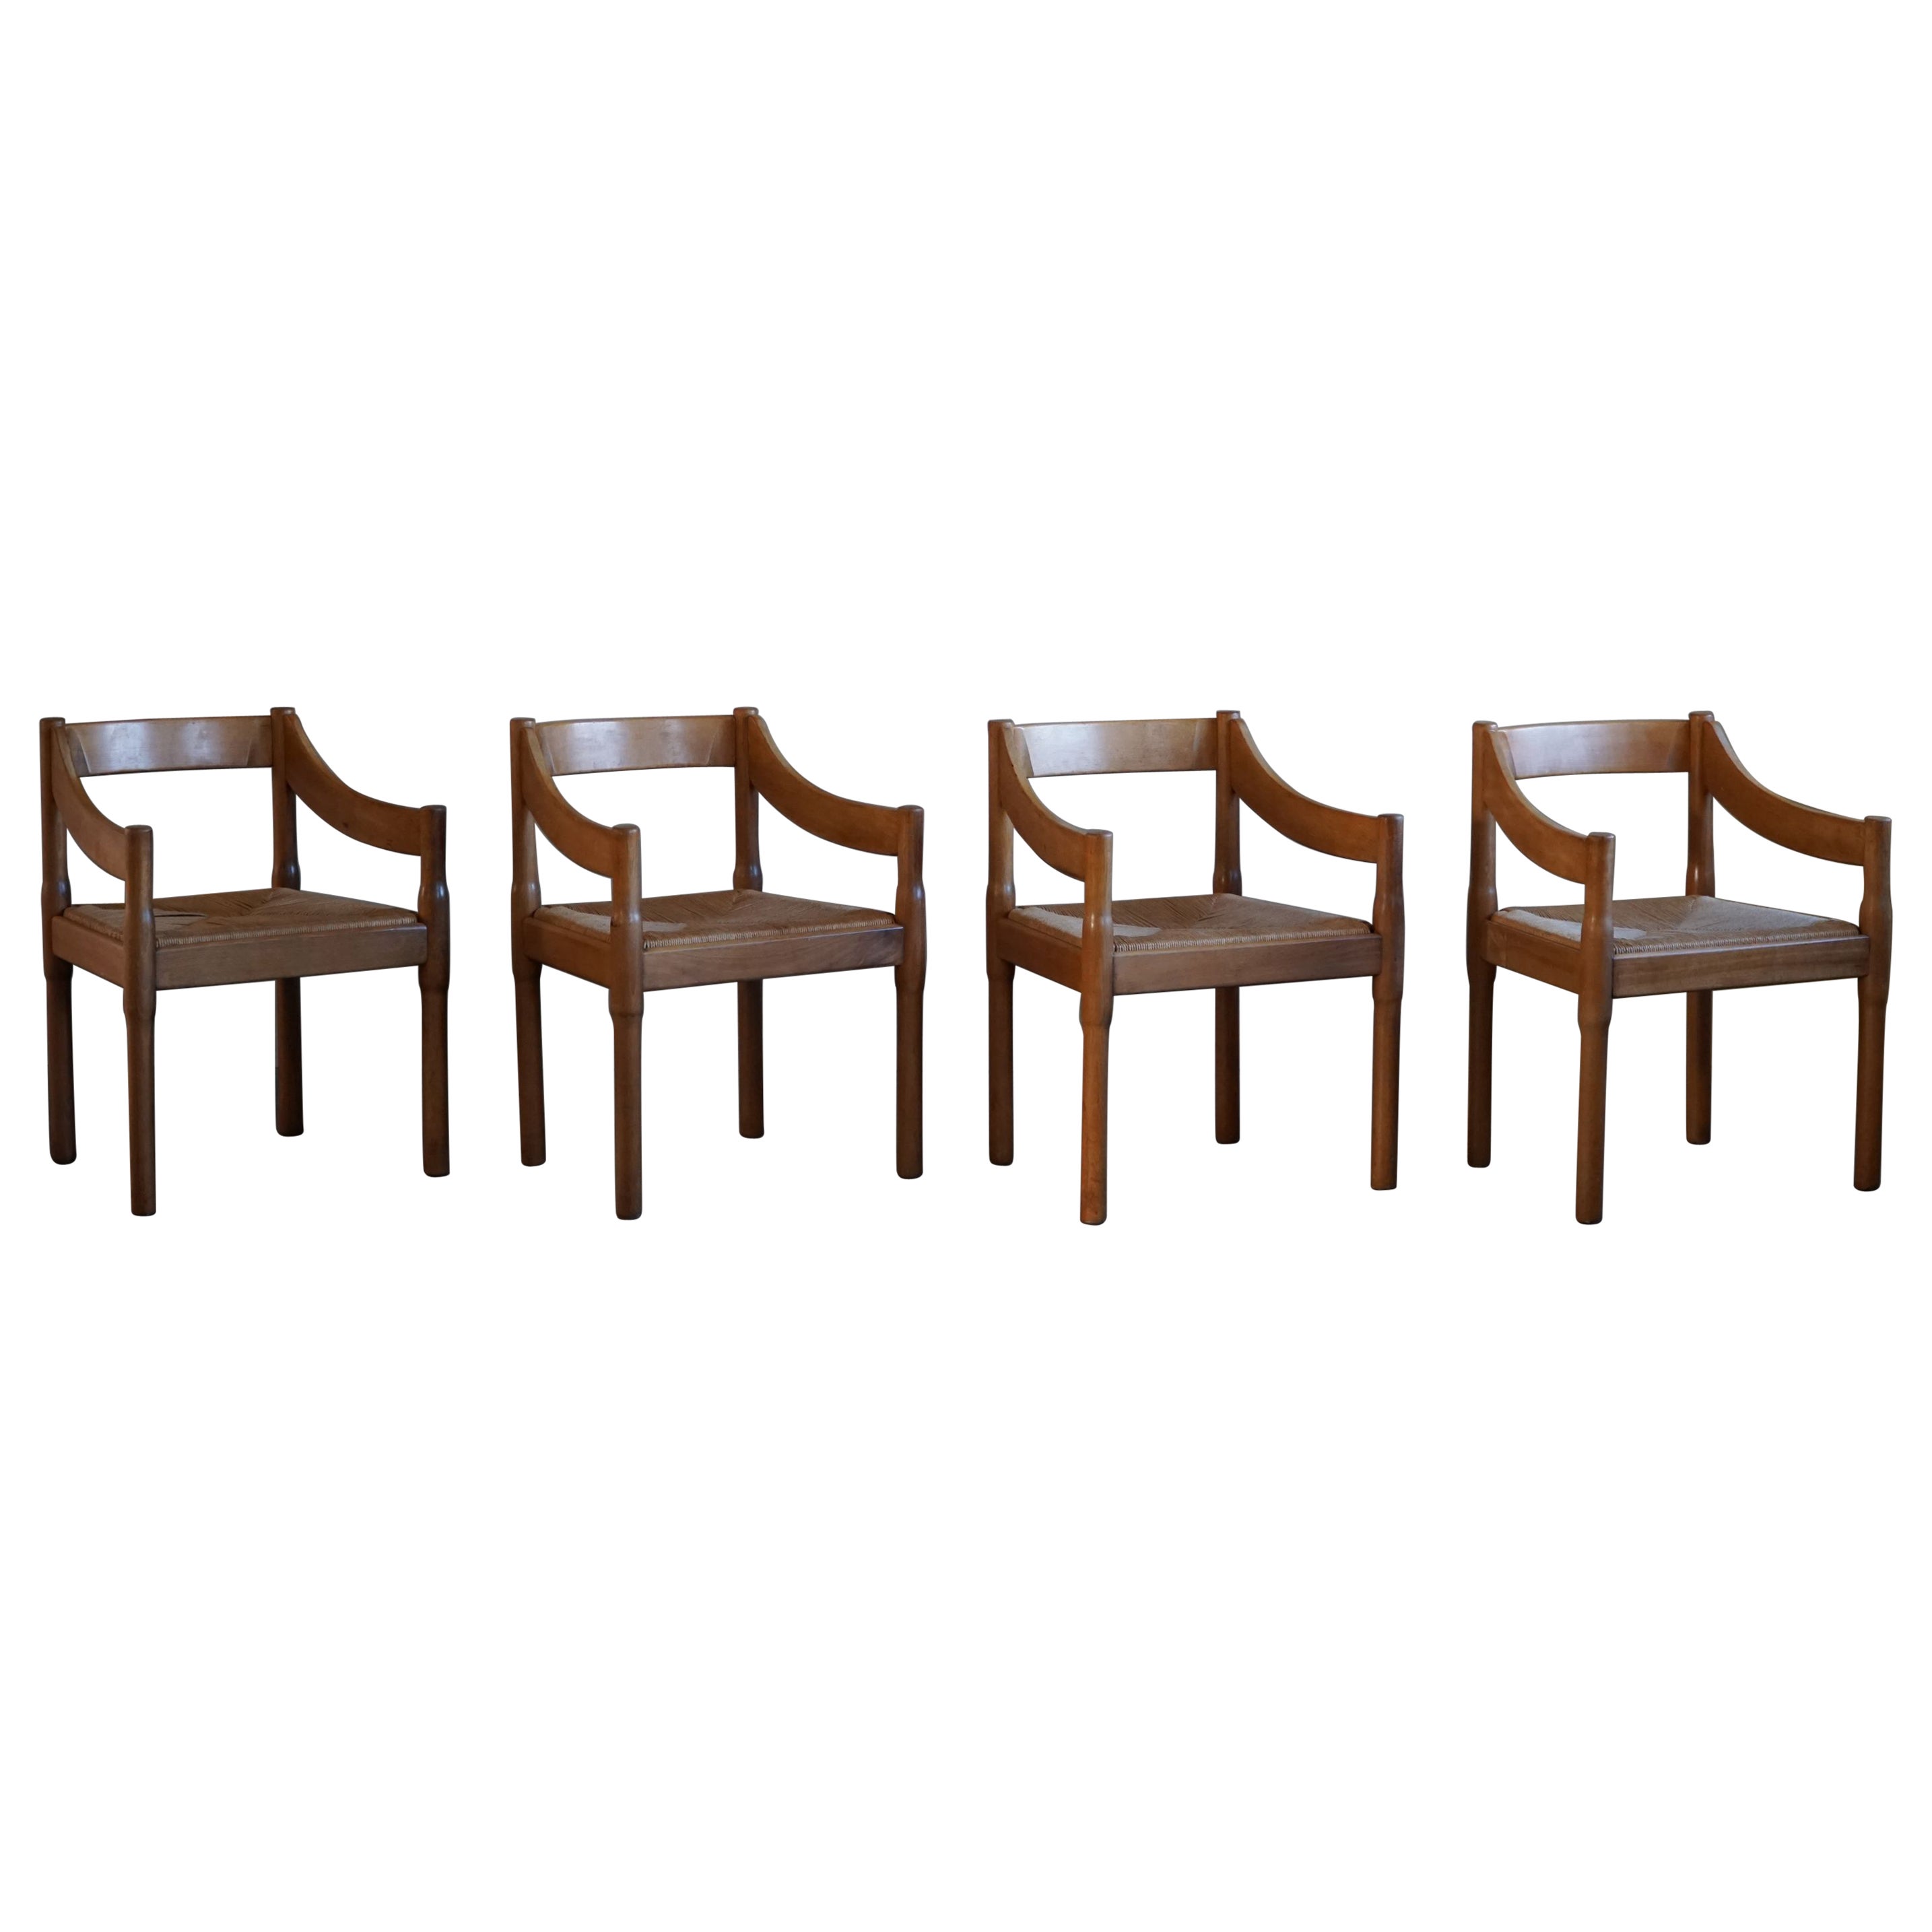 Vico Magistretti, Set of 4 "Carimate" Chairs for Cassina, Italian Modern, 1970s For Sale